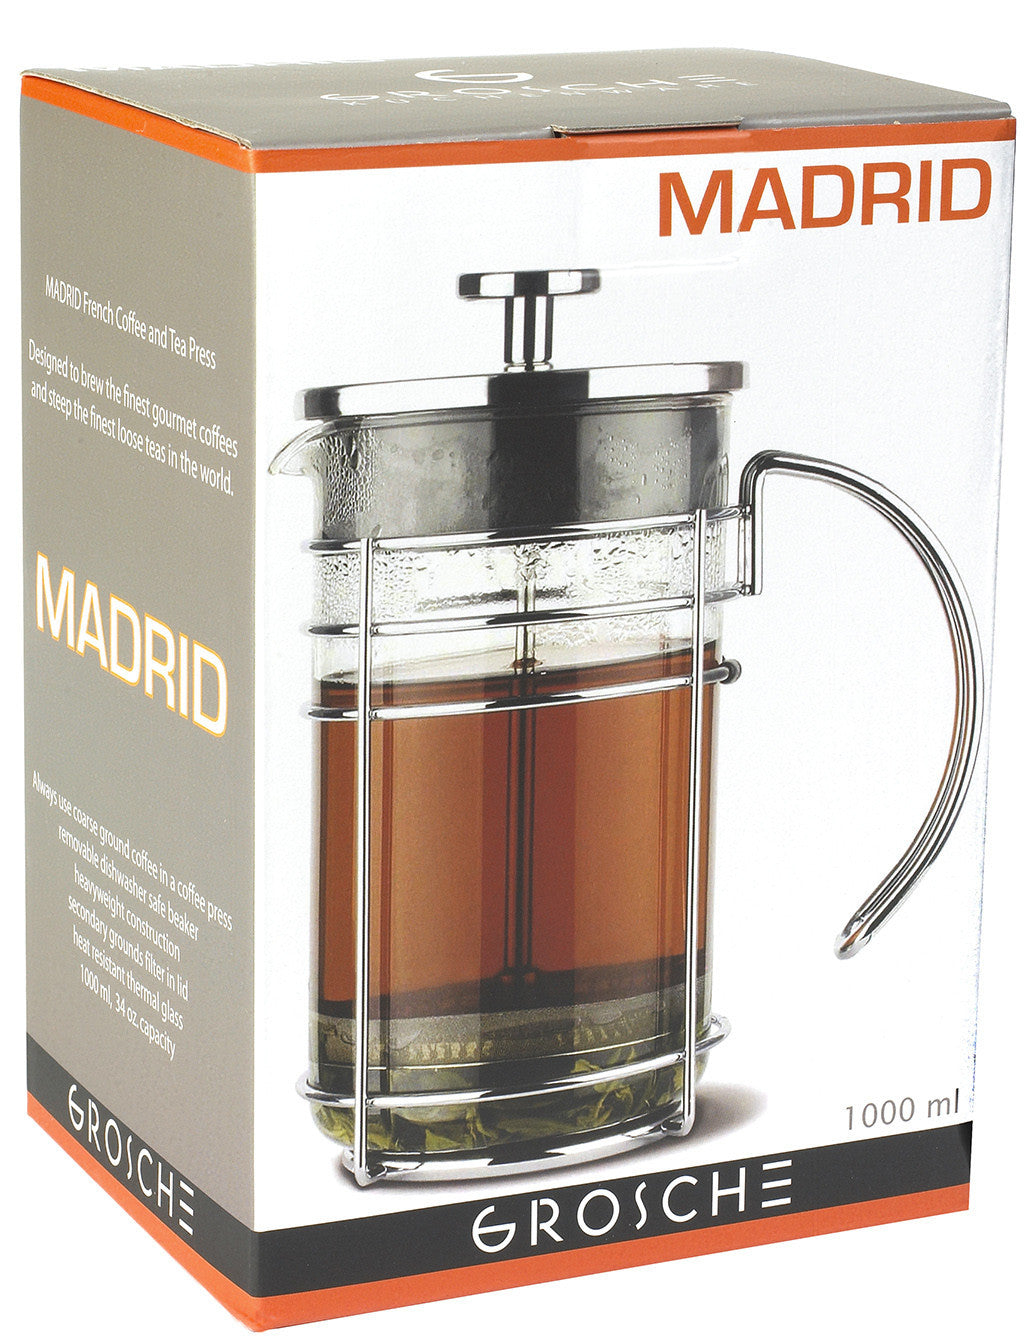 Grosche Madrid French Press Coffee Tea Maker 350 Ml 11.8 Oz. New in Open  Box